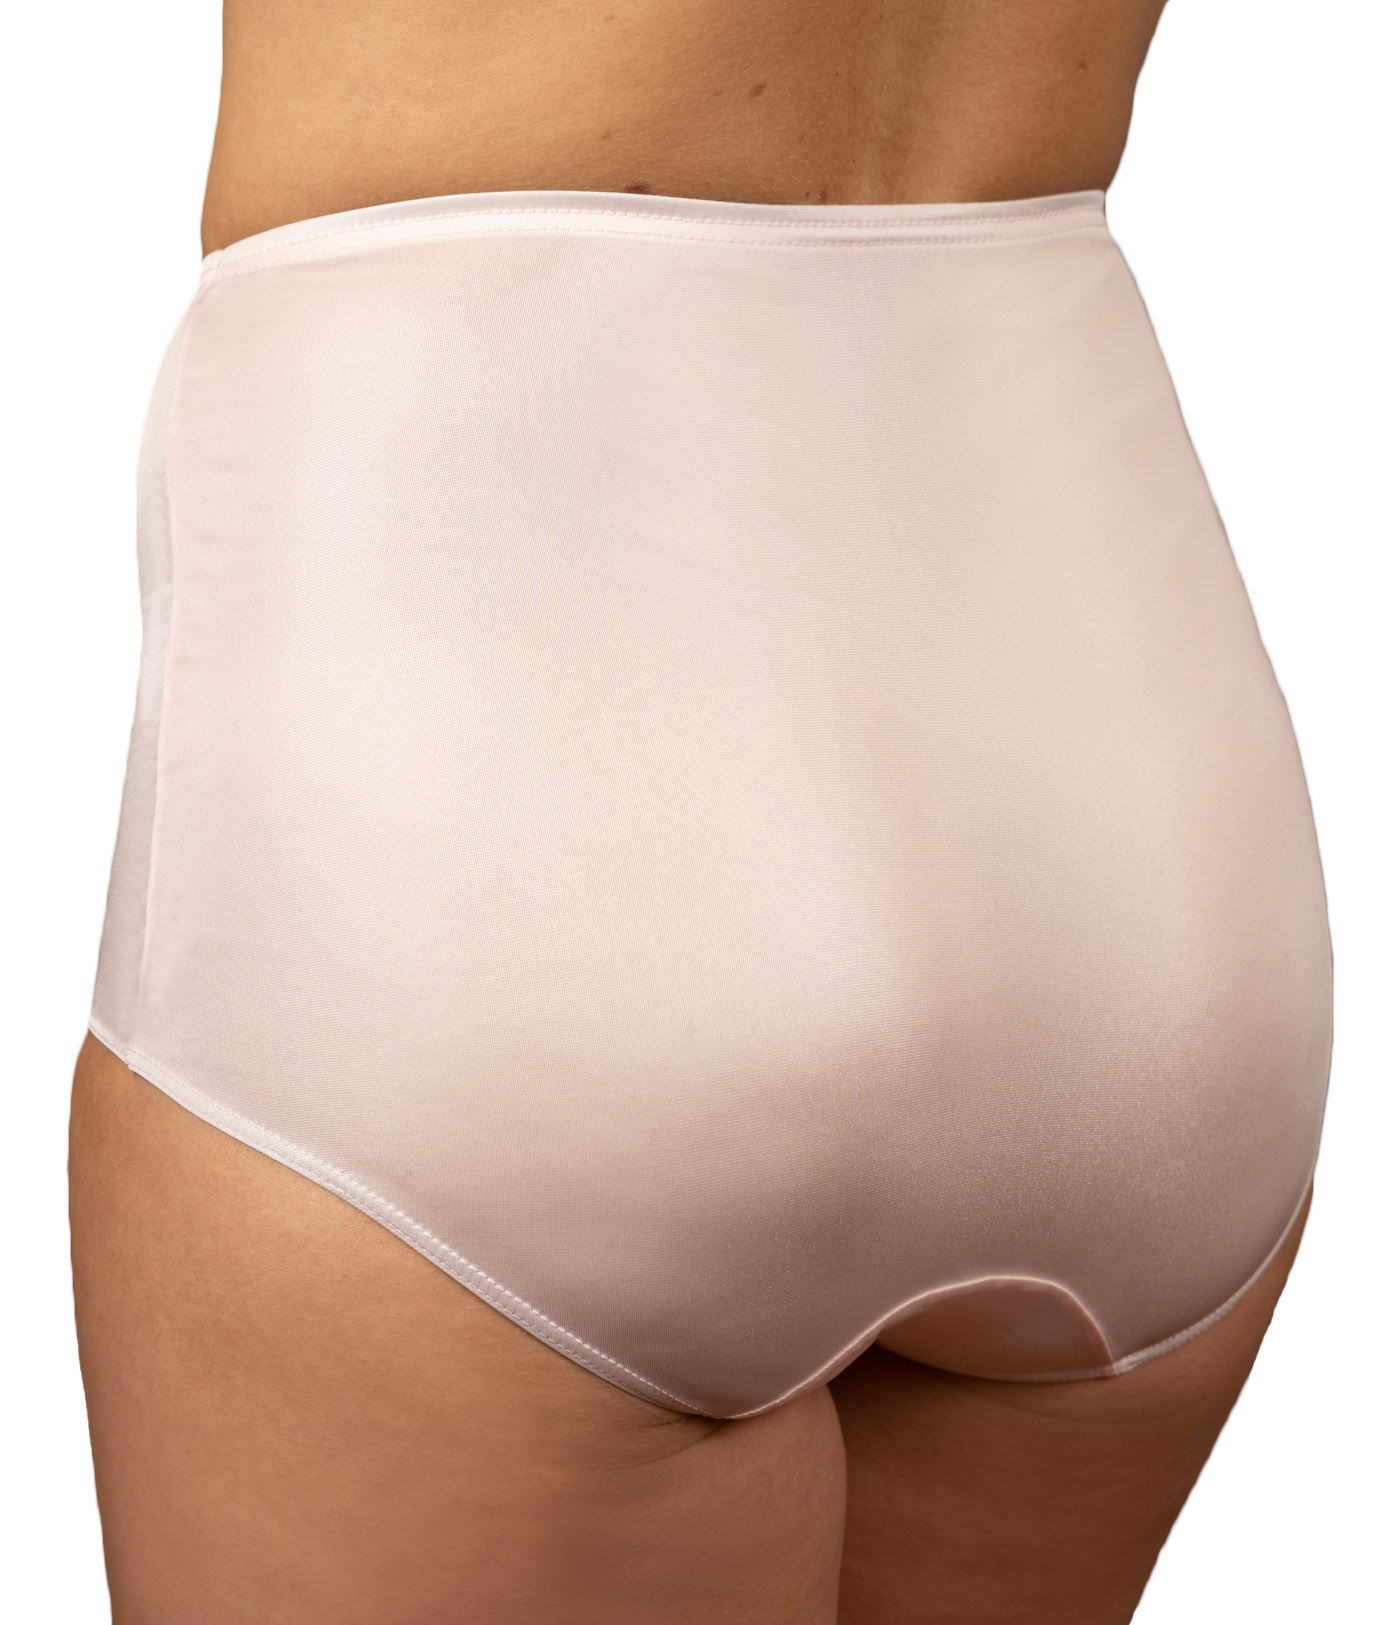 ILOVEDIY Beautyfinding Store seamless panties women briefs nylon